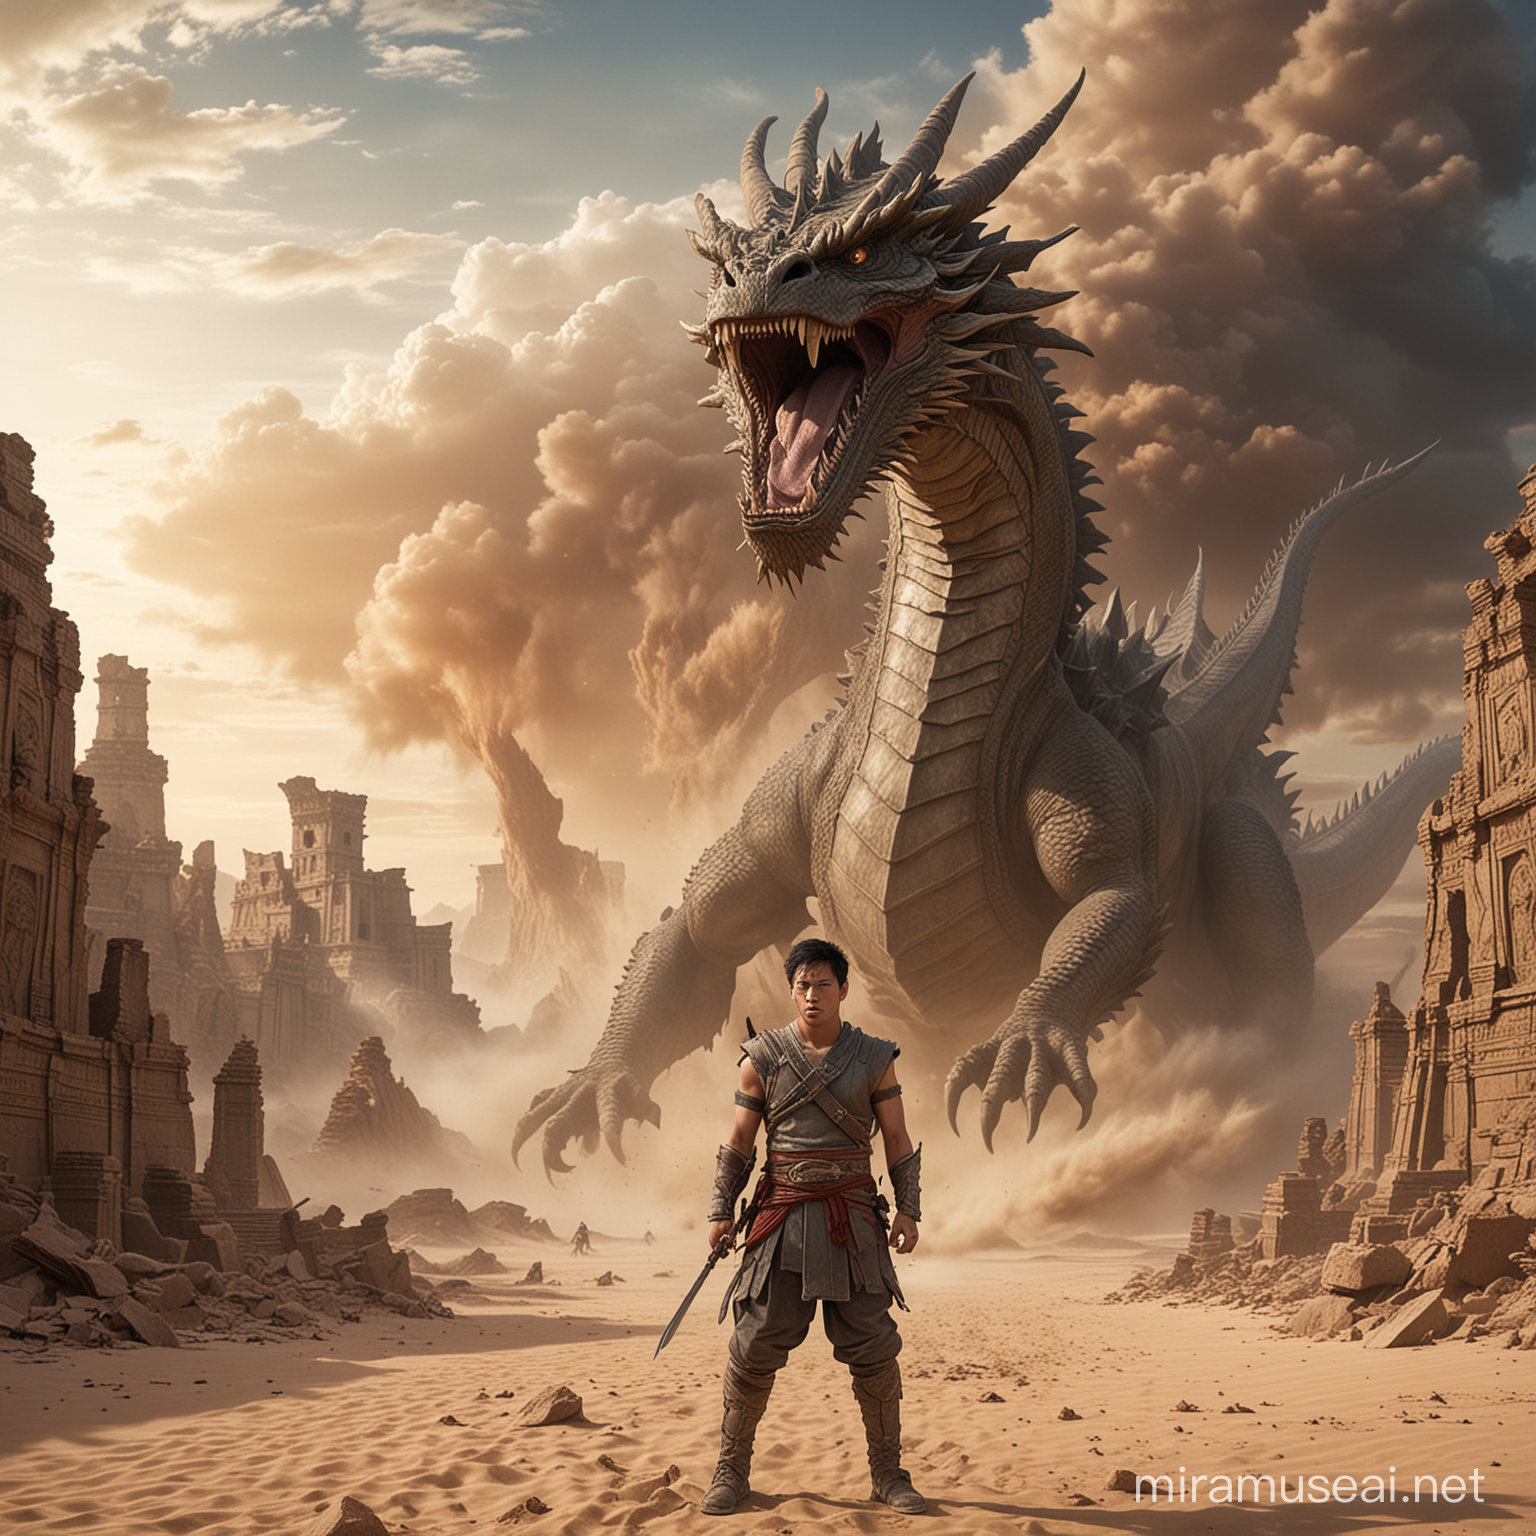 Fierce Asian Warrior Confronts Giant Dragon in Desert Ruins